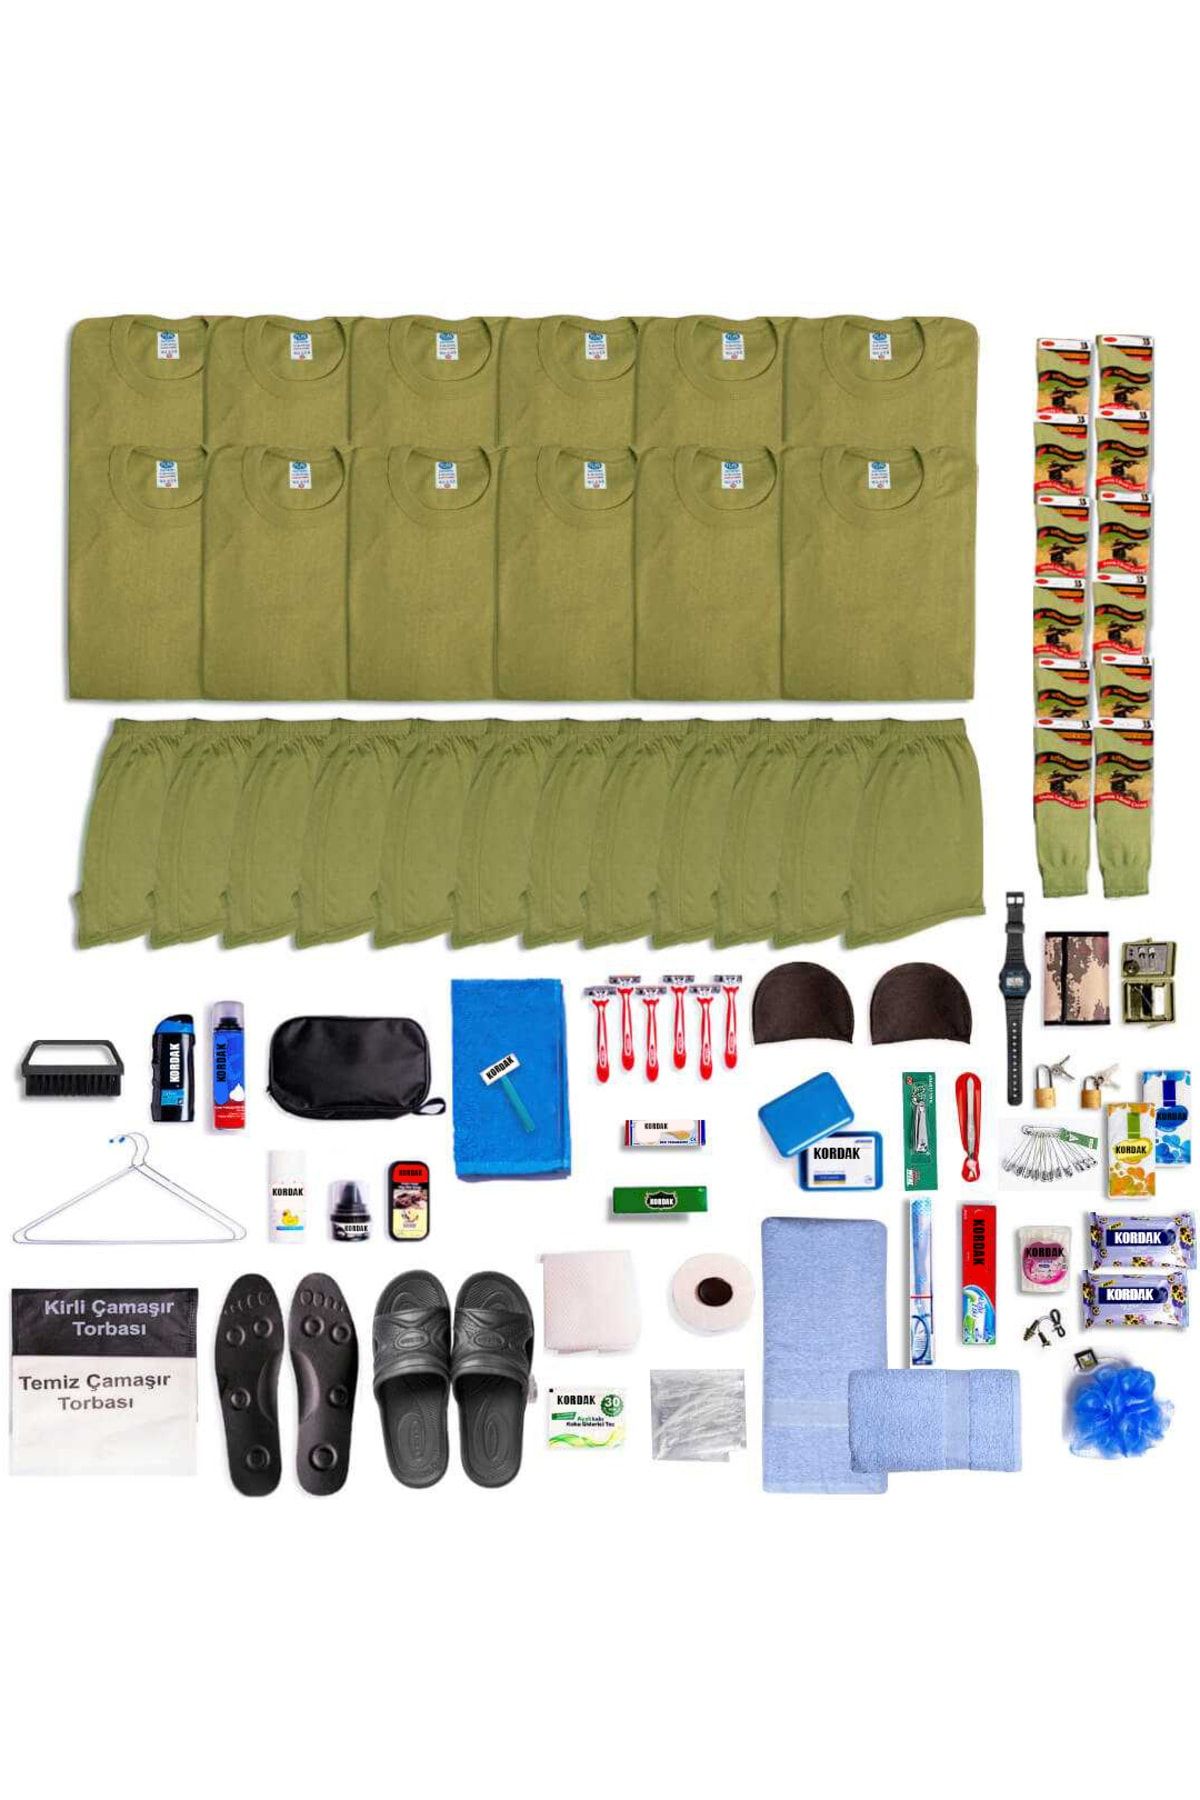 KORDAK 12'li Her Şey Dahil Bedelli Askerlik Malzemeleri - Bedelli Asker Seti -asker Kolisi - Asker Paketi